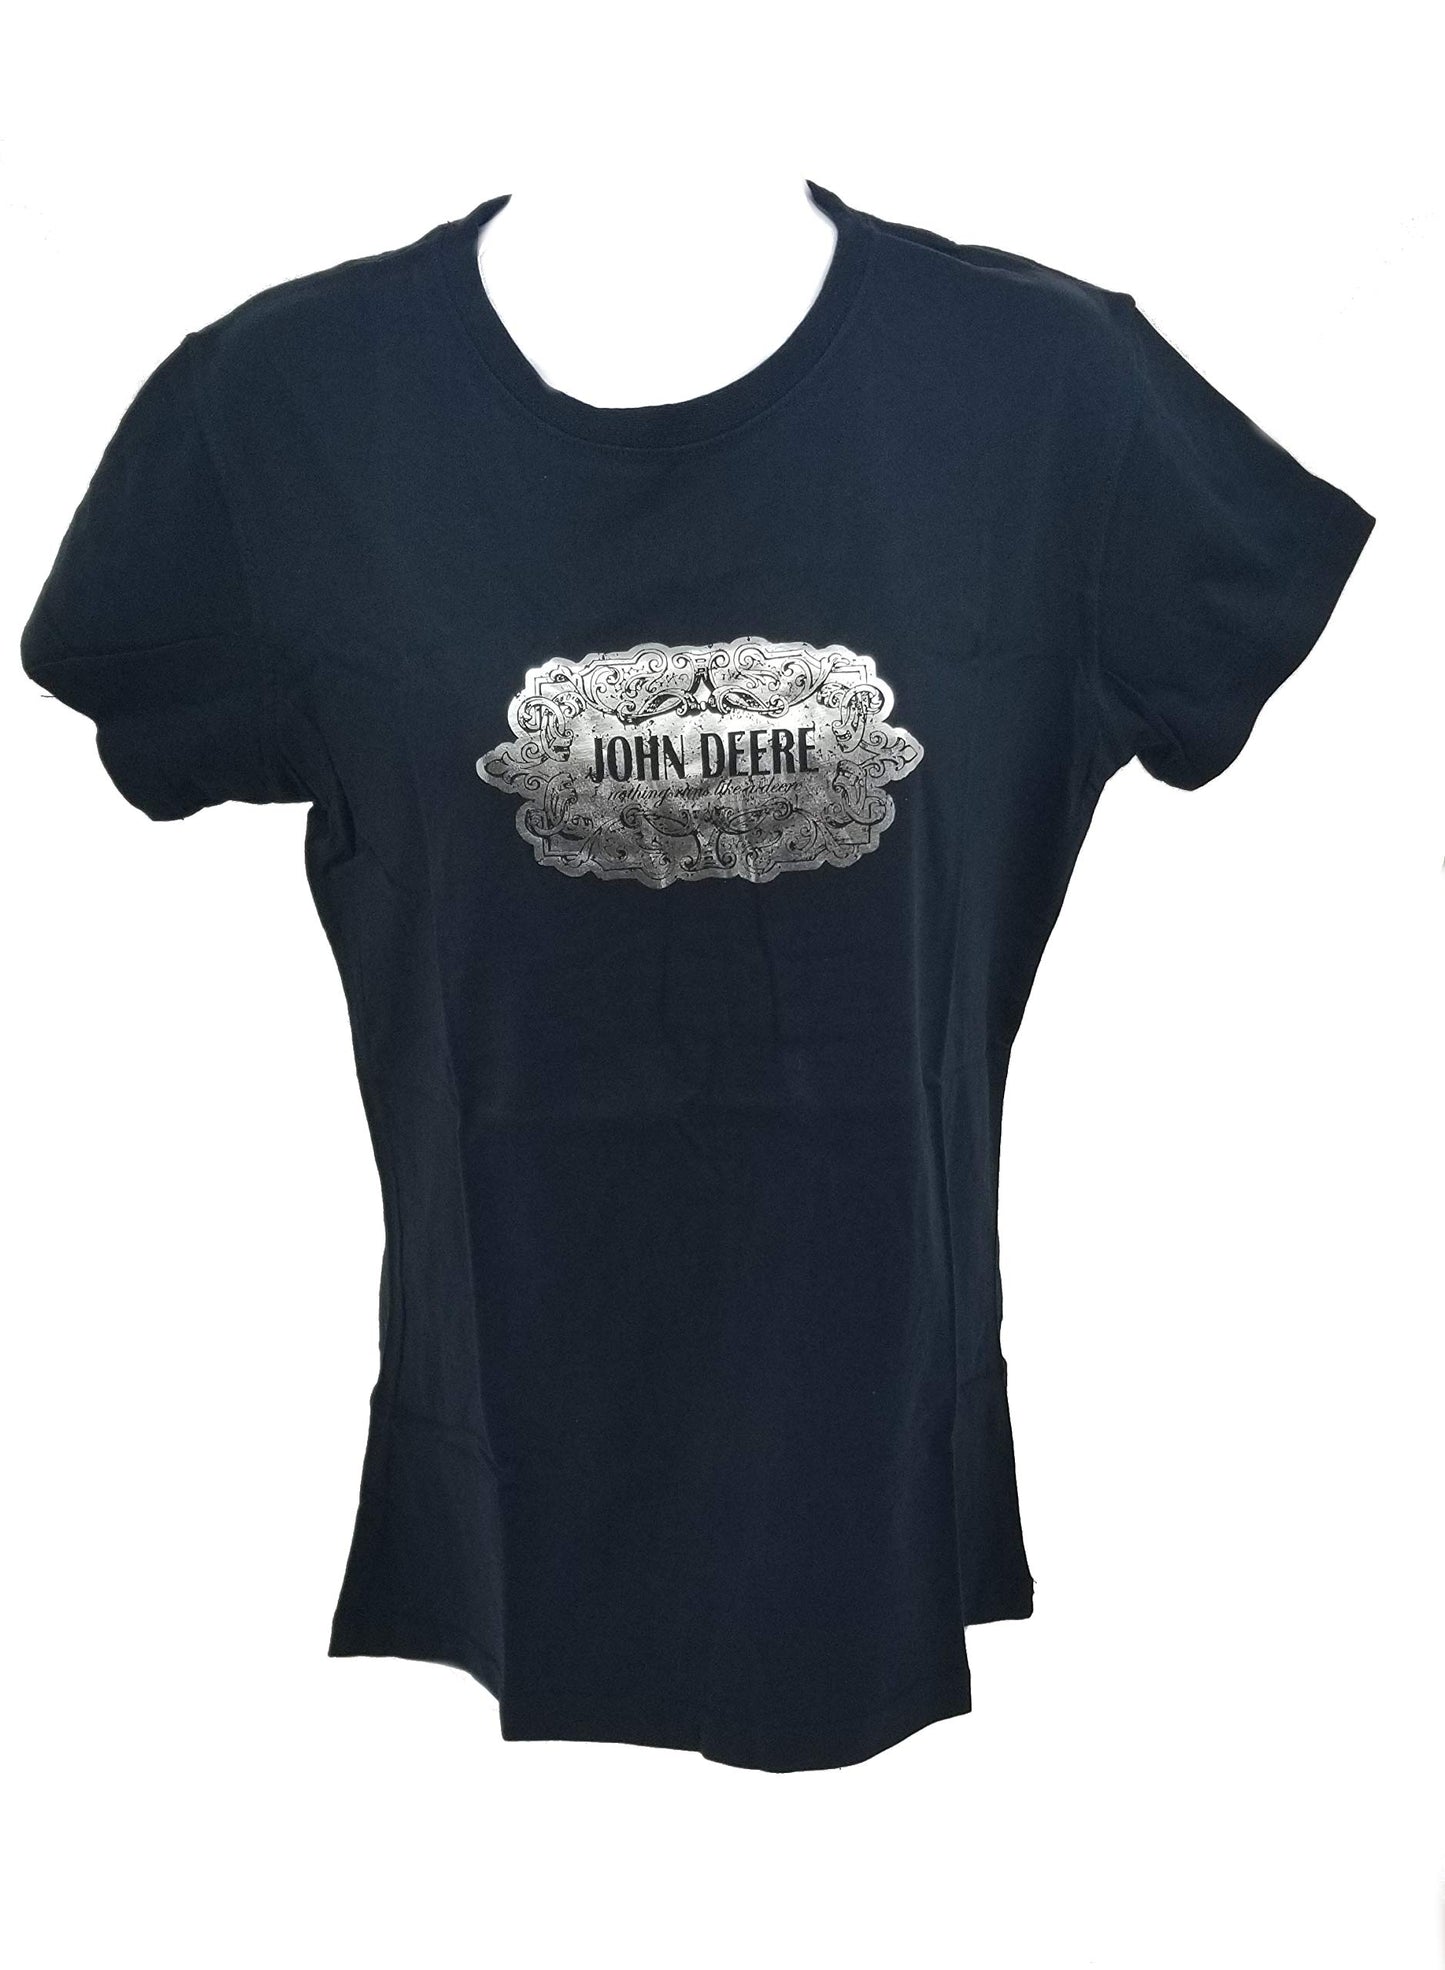 Ladies John Deere Black with Silver Foil T-Shirt (Medium) - 23005131